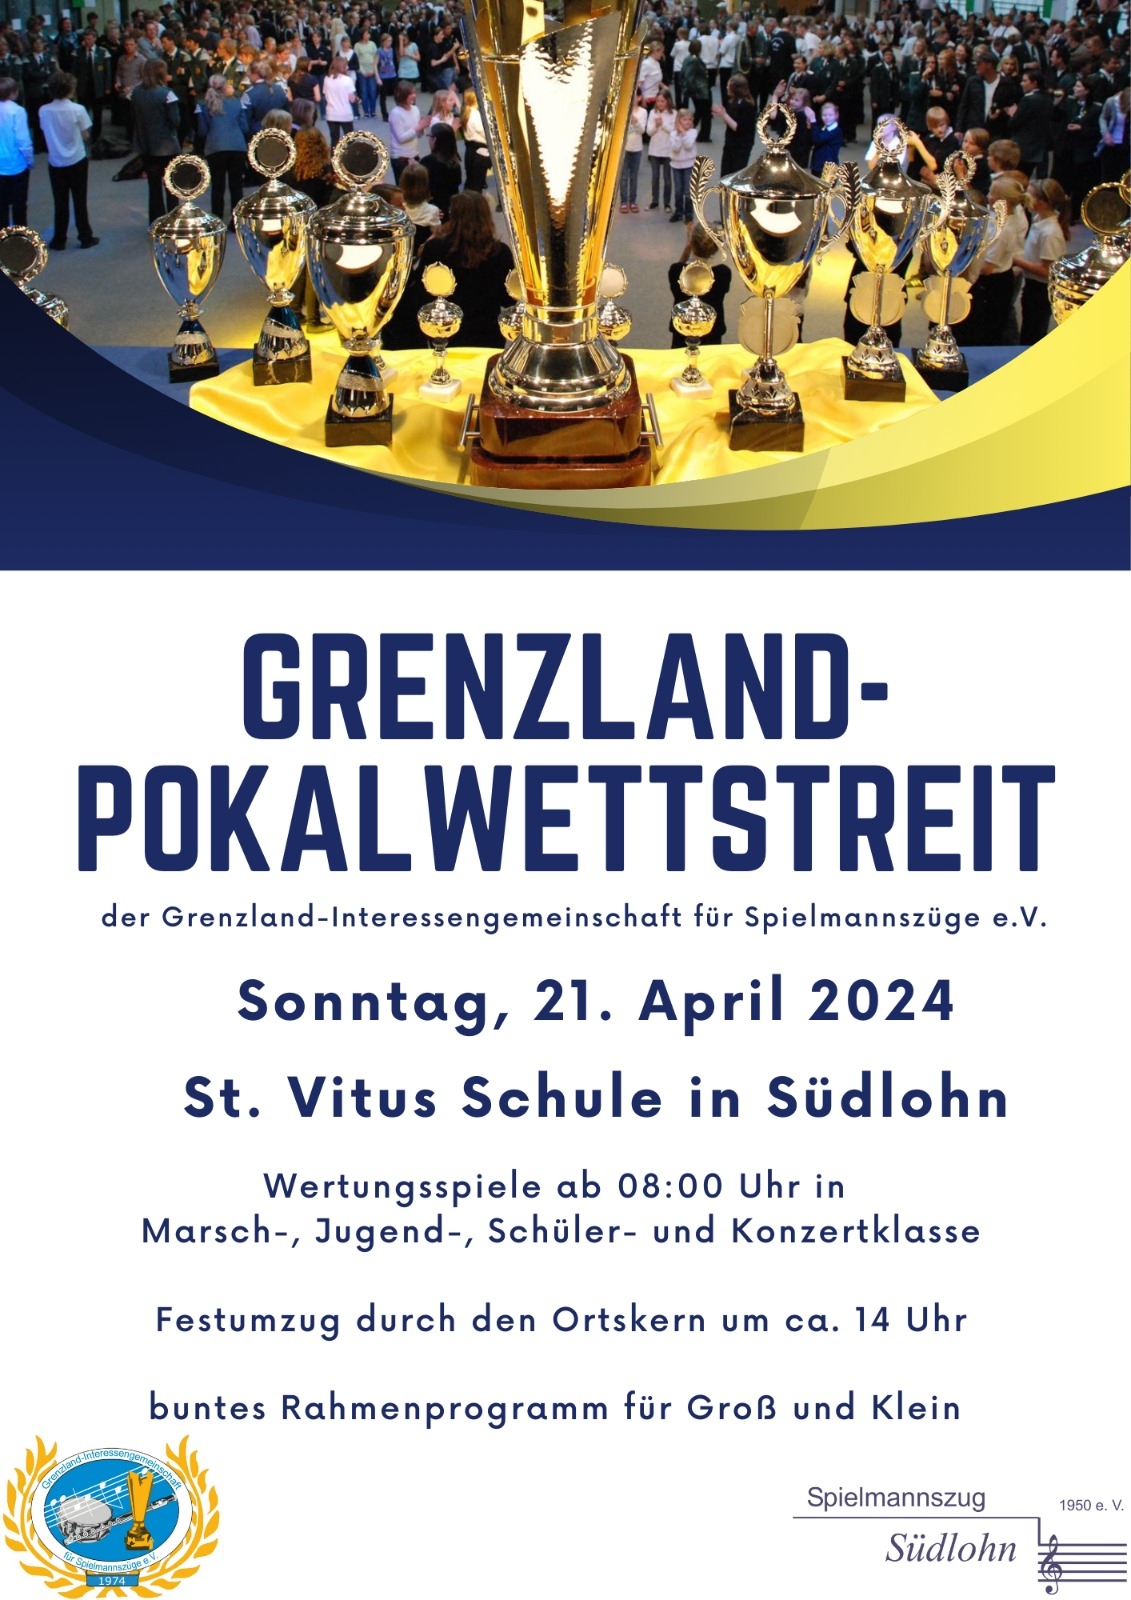 Grenzland-Pokalwettstreit 2024